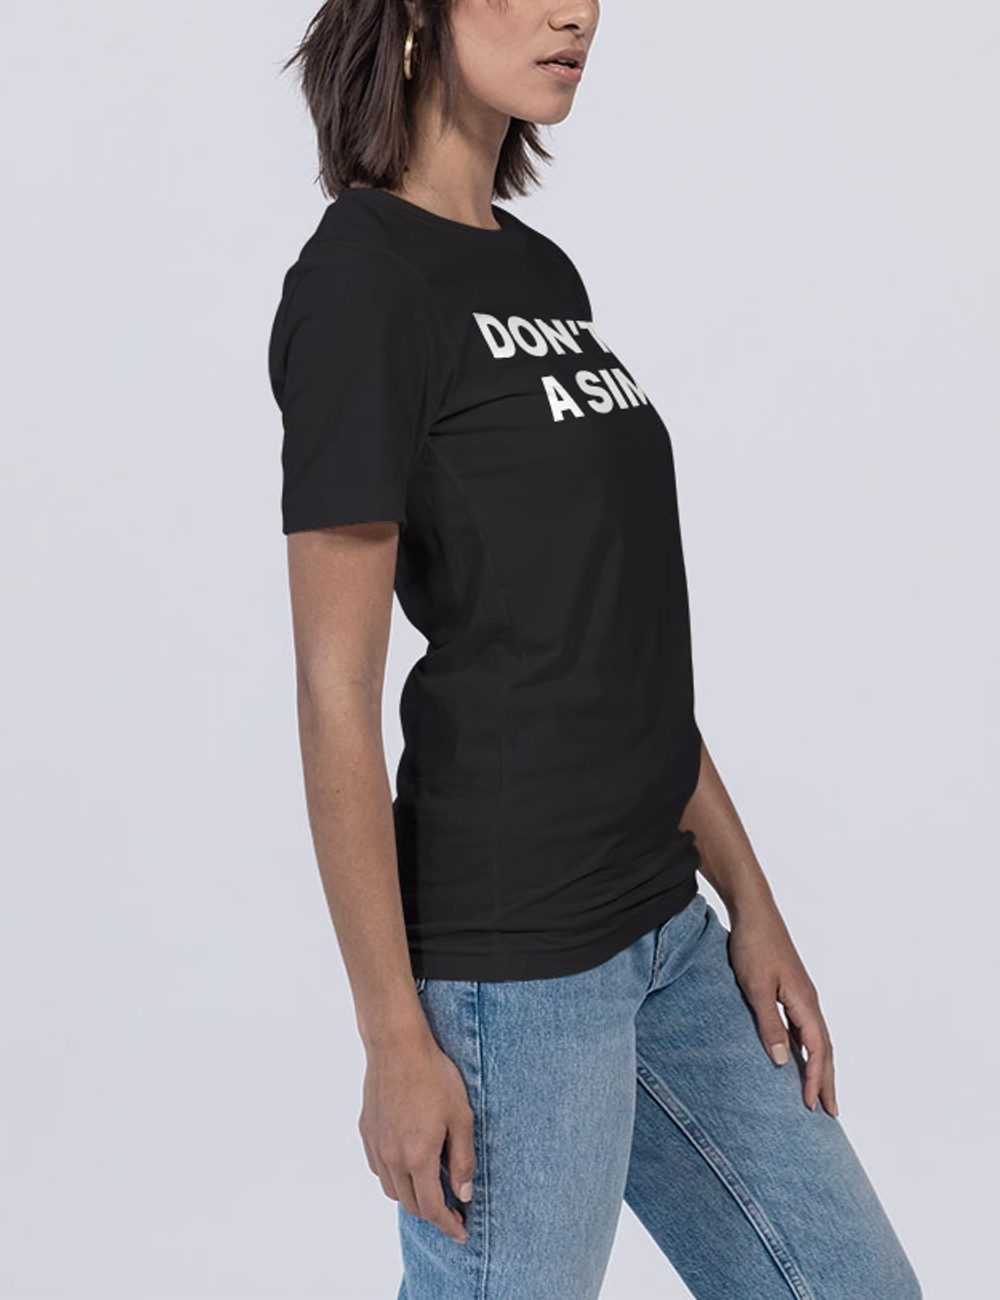 Don't Be A Simp Women's Soft Jersey T-Shirt OniTakai